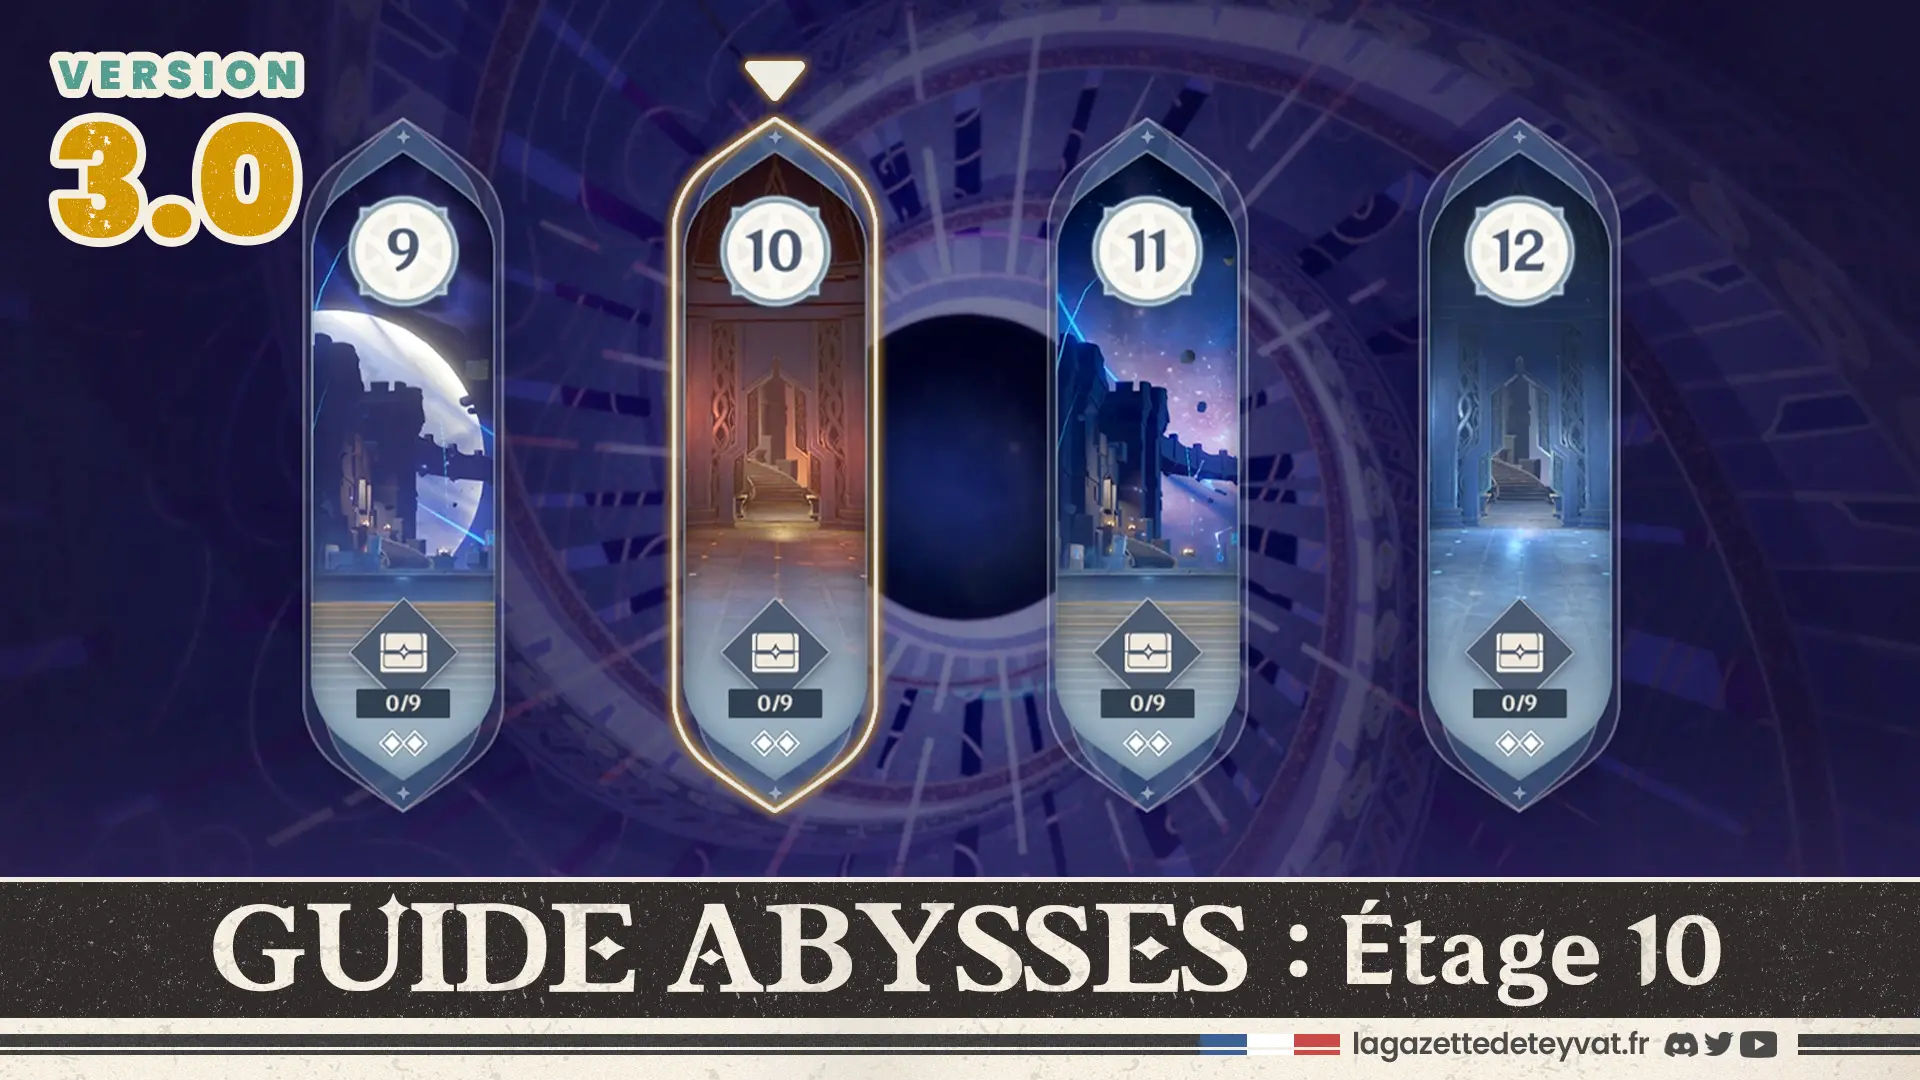 Abysses 3.0 étage 10